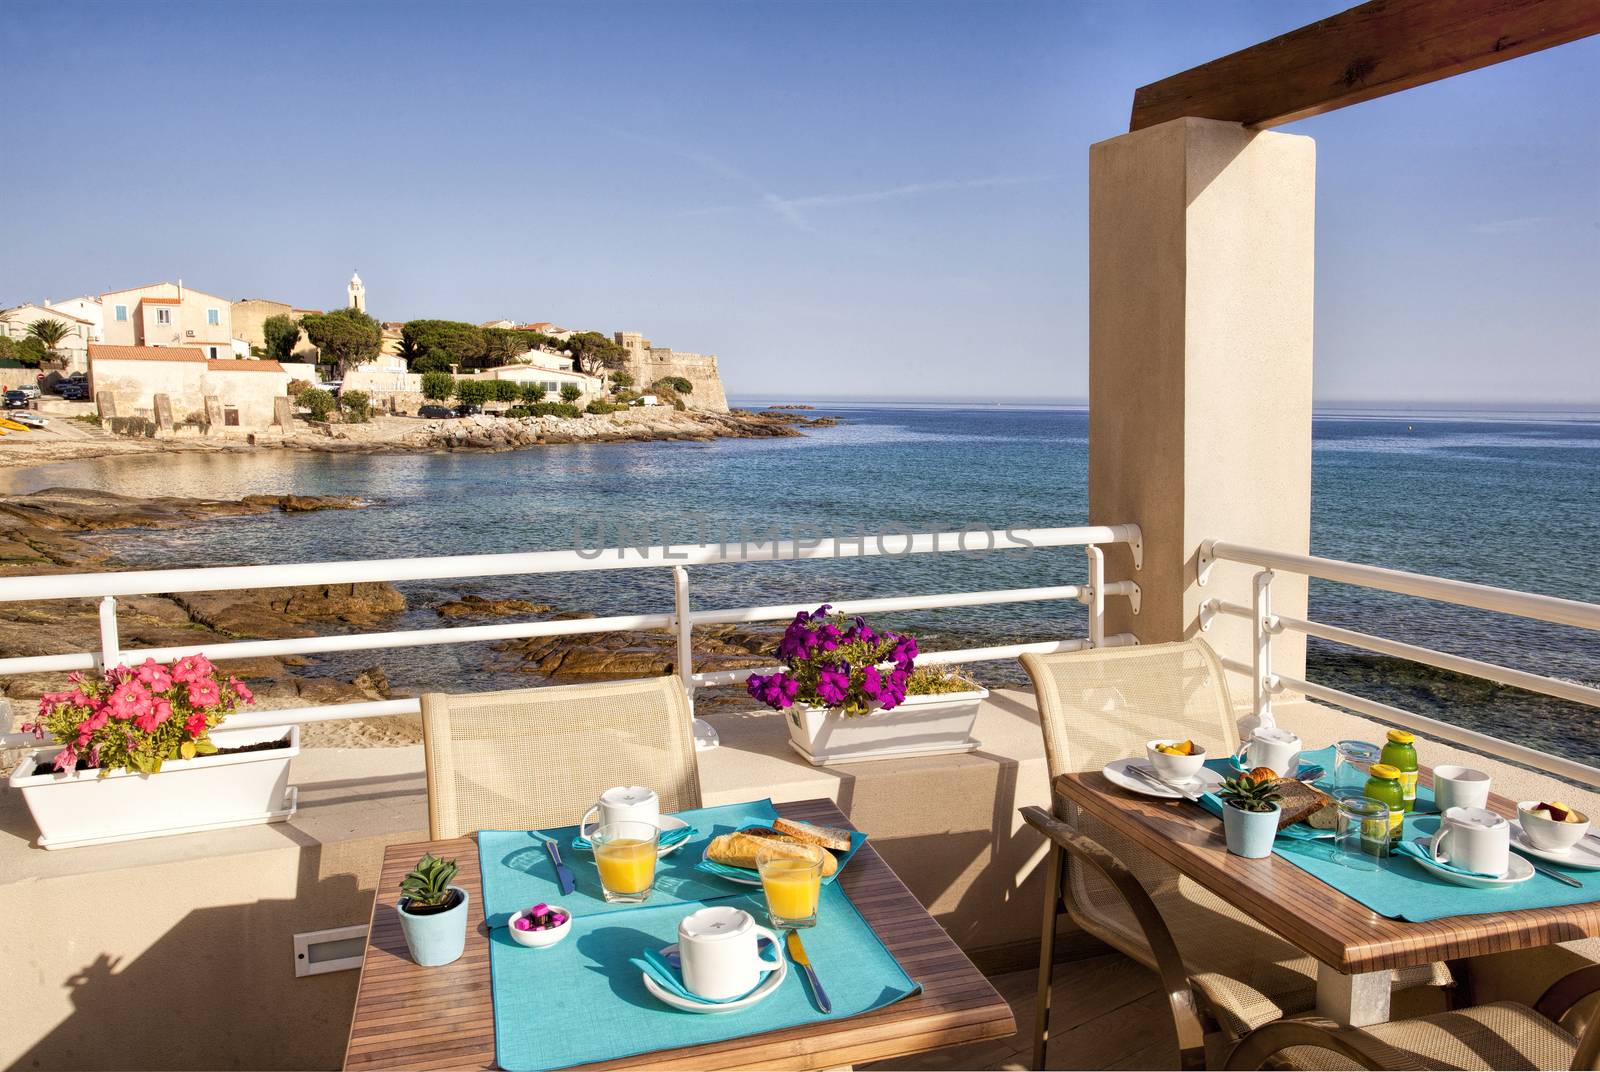 breakfast on the sea in Corsica